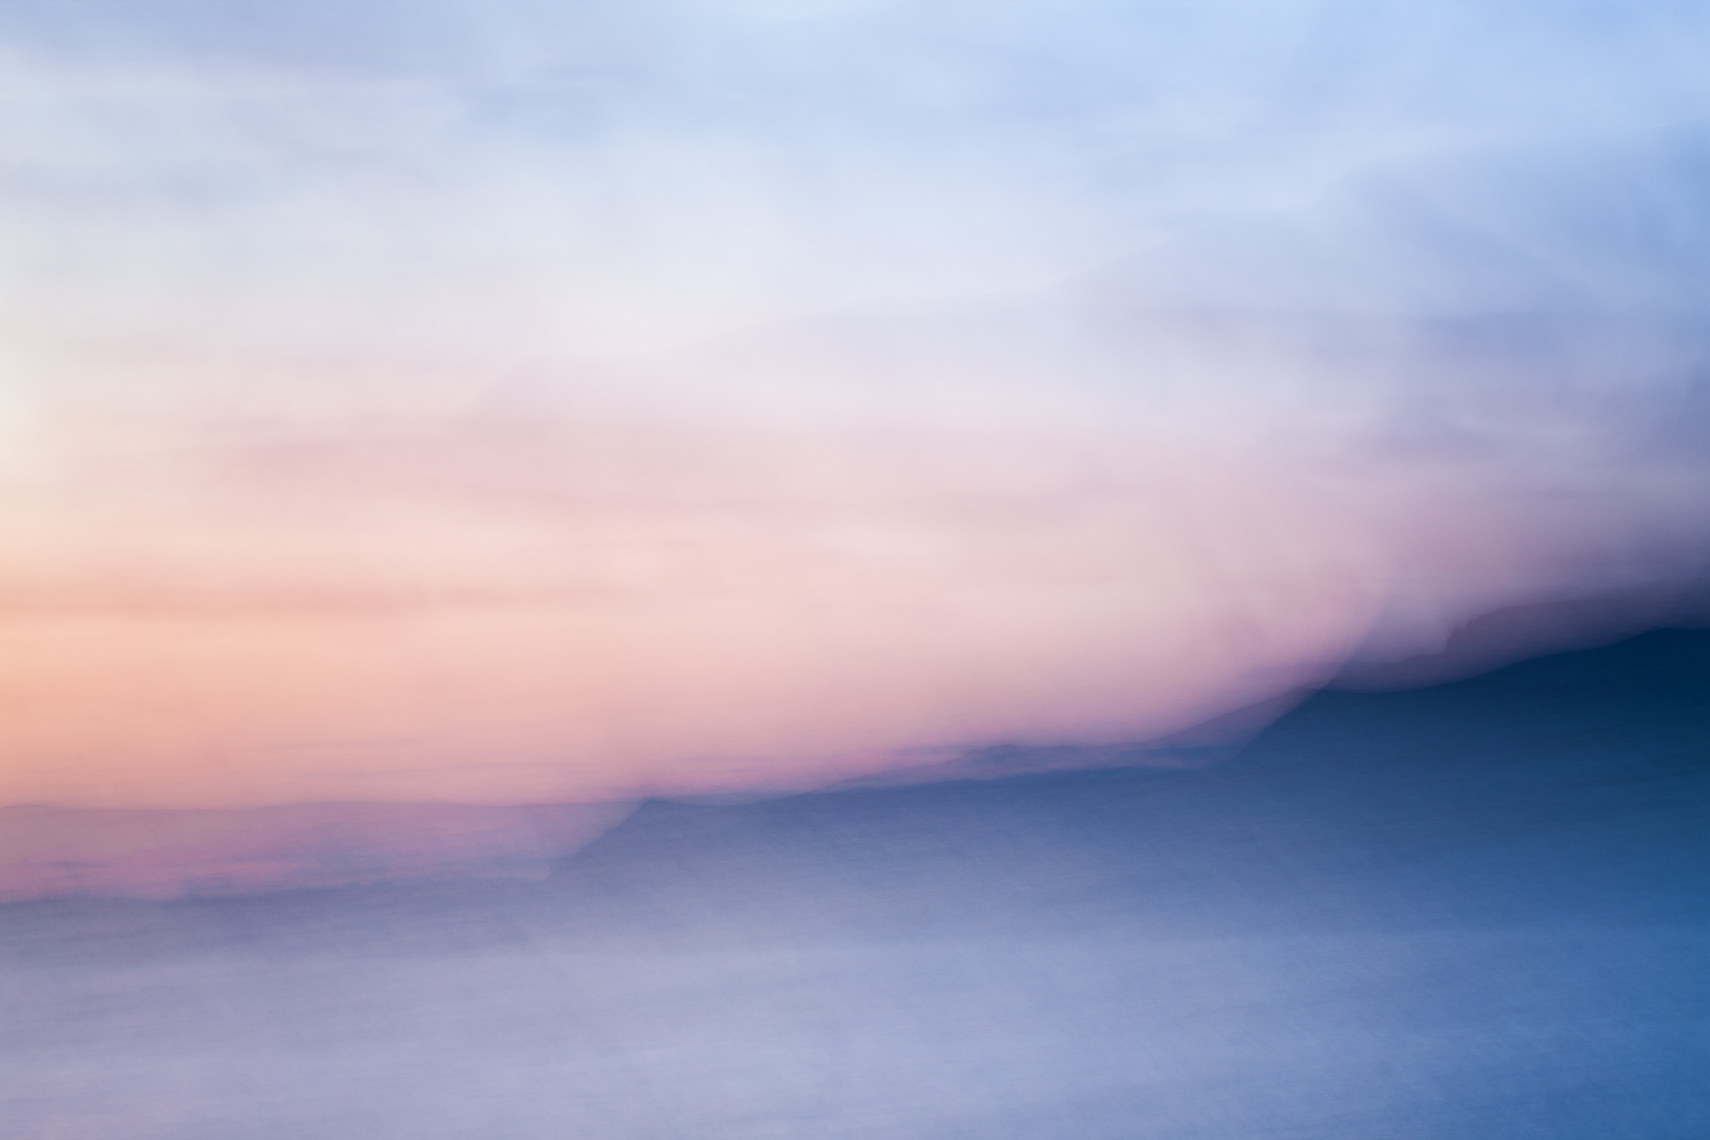 The Art of Stillness - Mt. Esja at Midnight